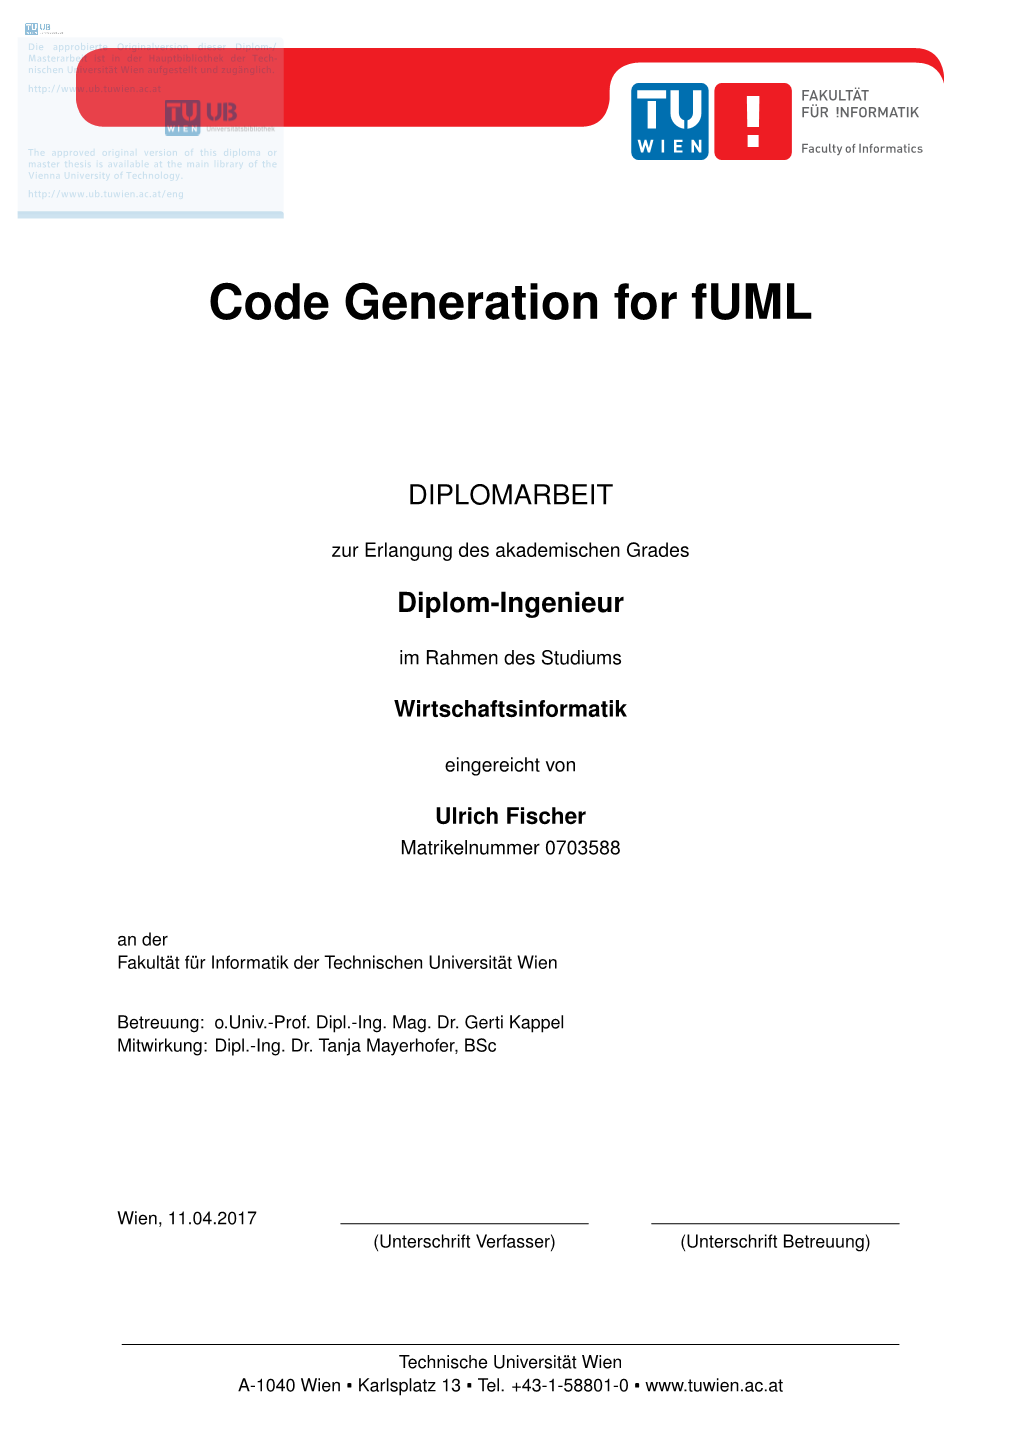 Code Generation for Fuml